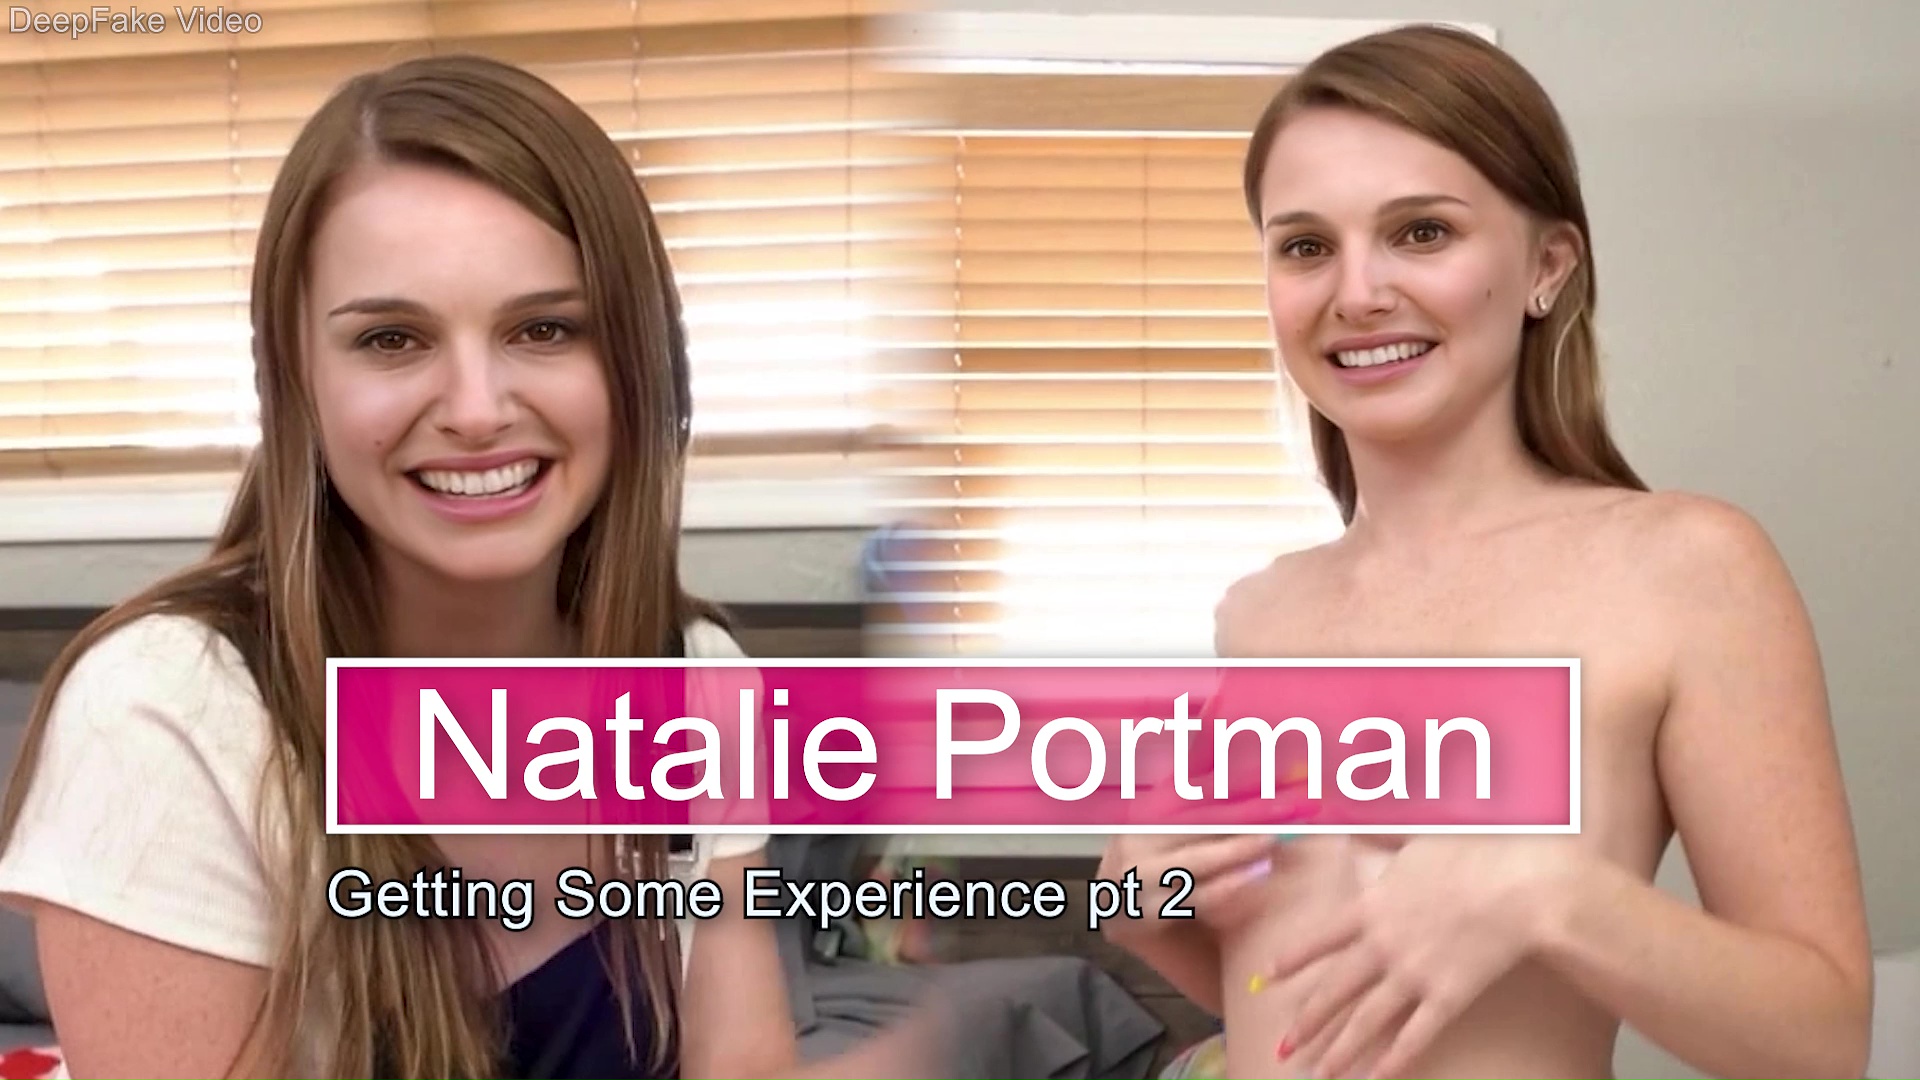 Natalie Portman - Getting Some Experience Pt 2 - Trailer